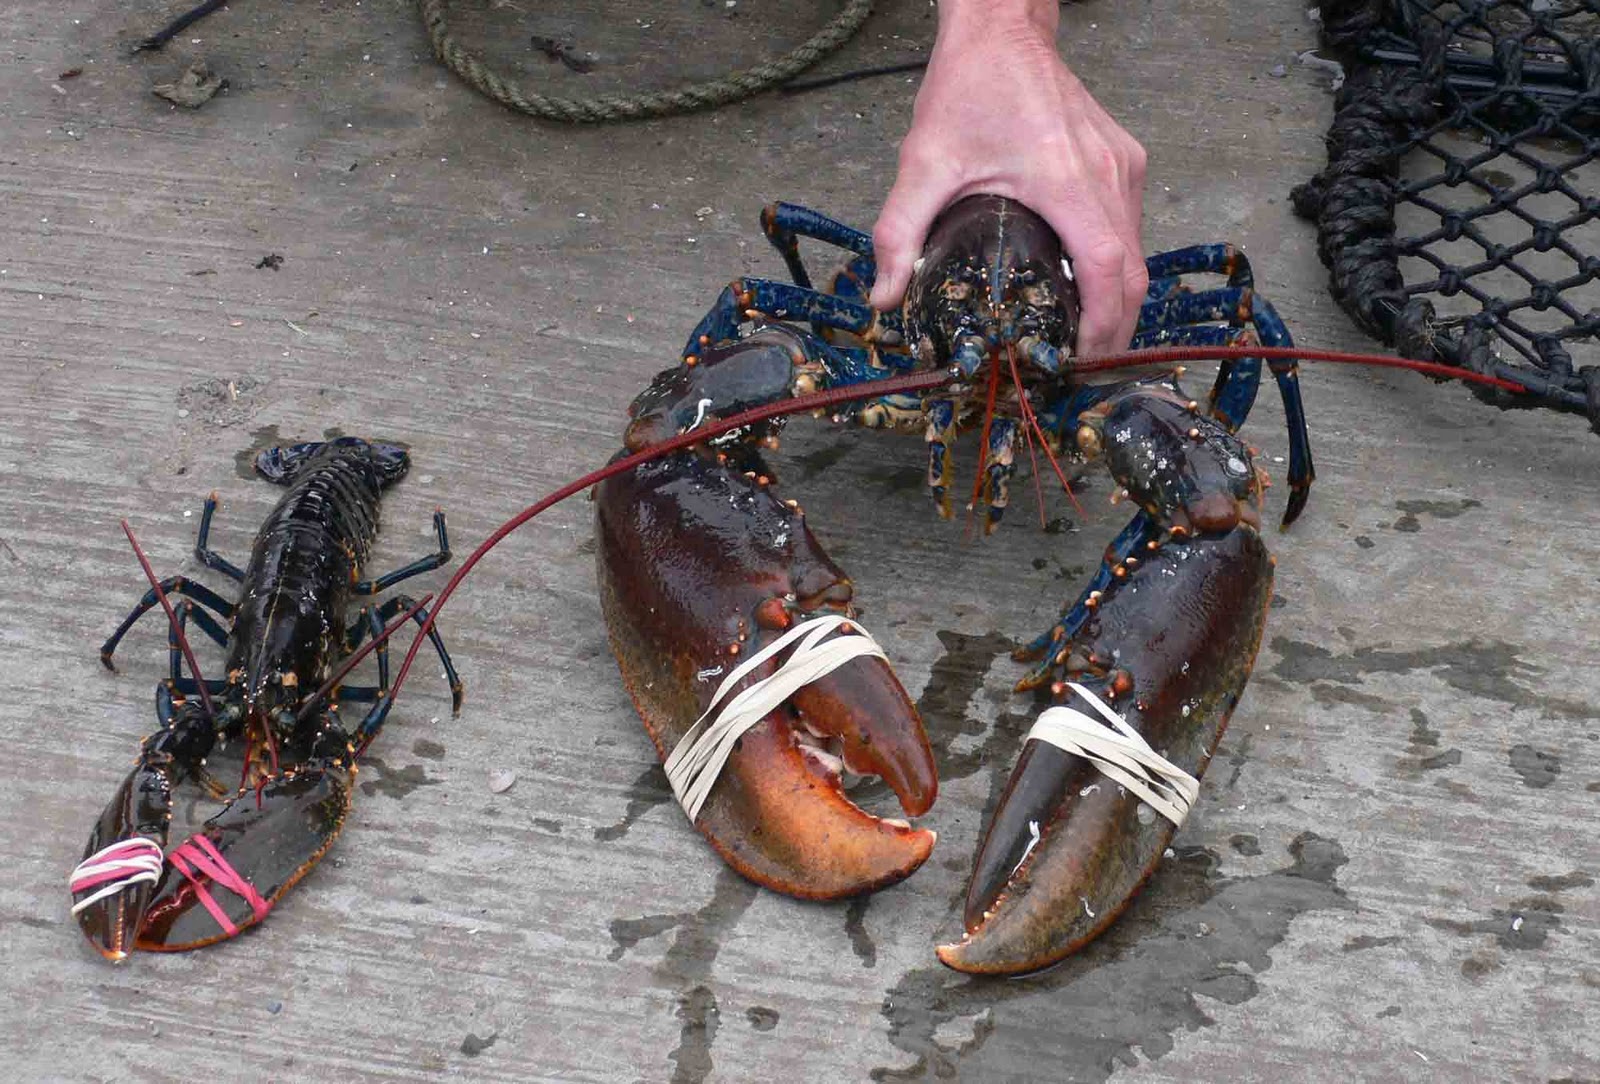 http://4.bp.blogspot.com/_h8PF1bPChlI/TGv1B4eHDGI/AAAAAAAAAy4/76OaqNiTDu8/s1600/king-lobster-2.jpg